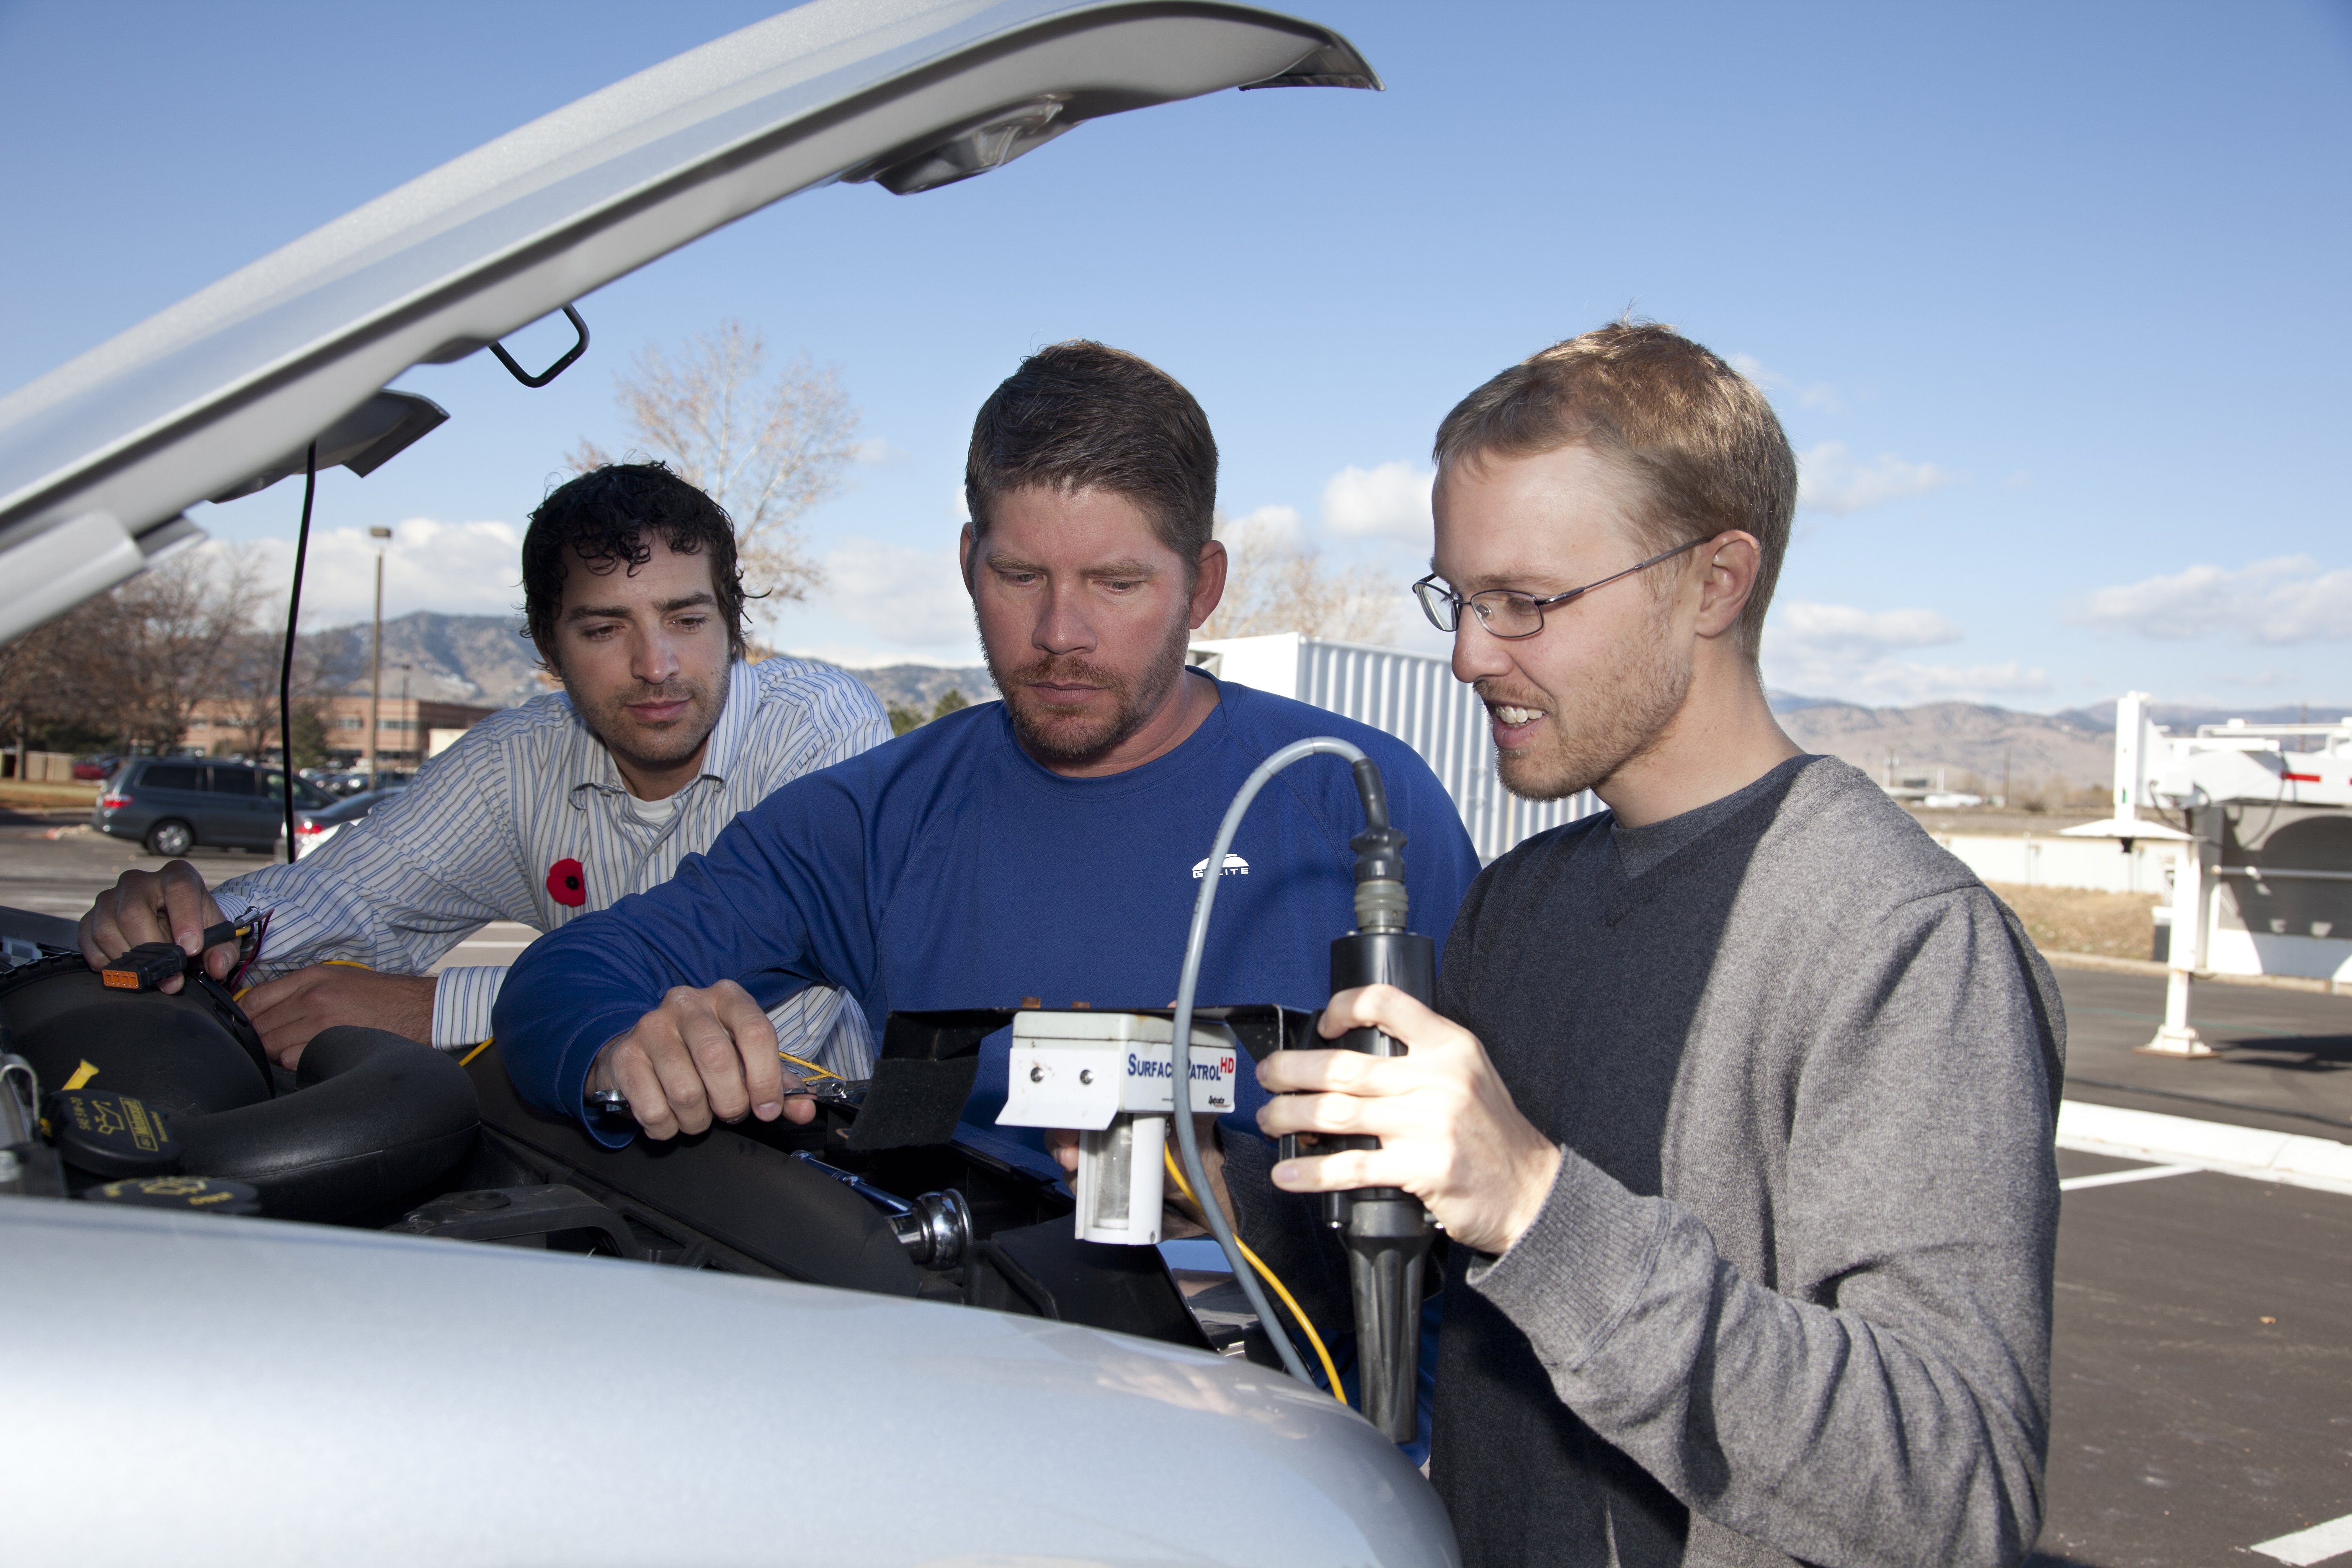 NCAR researchers Sheldon Drobot, Michael Chapman, and Brice Lambi install a vehicular weather sensor.